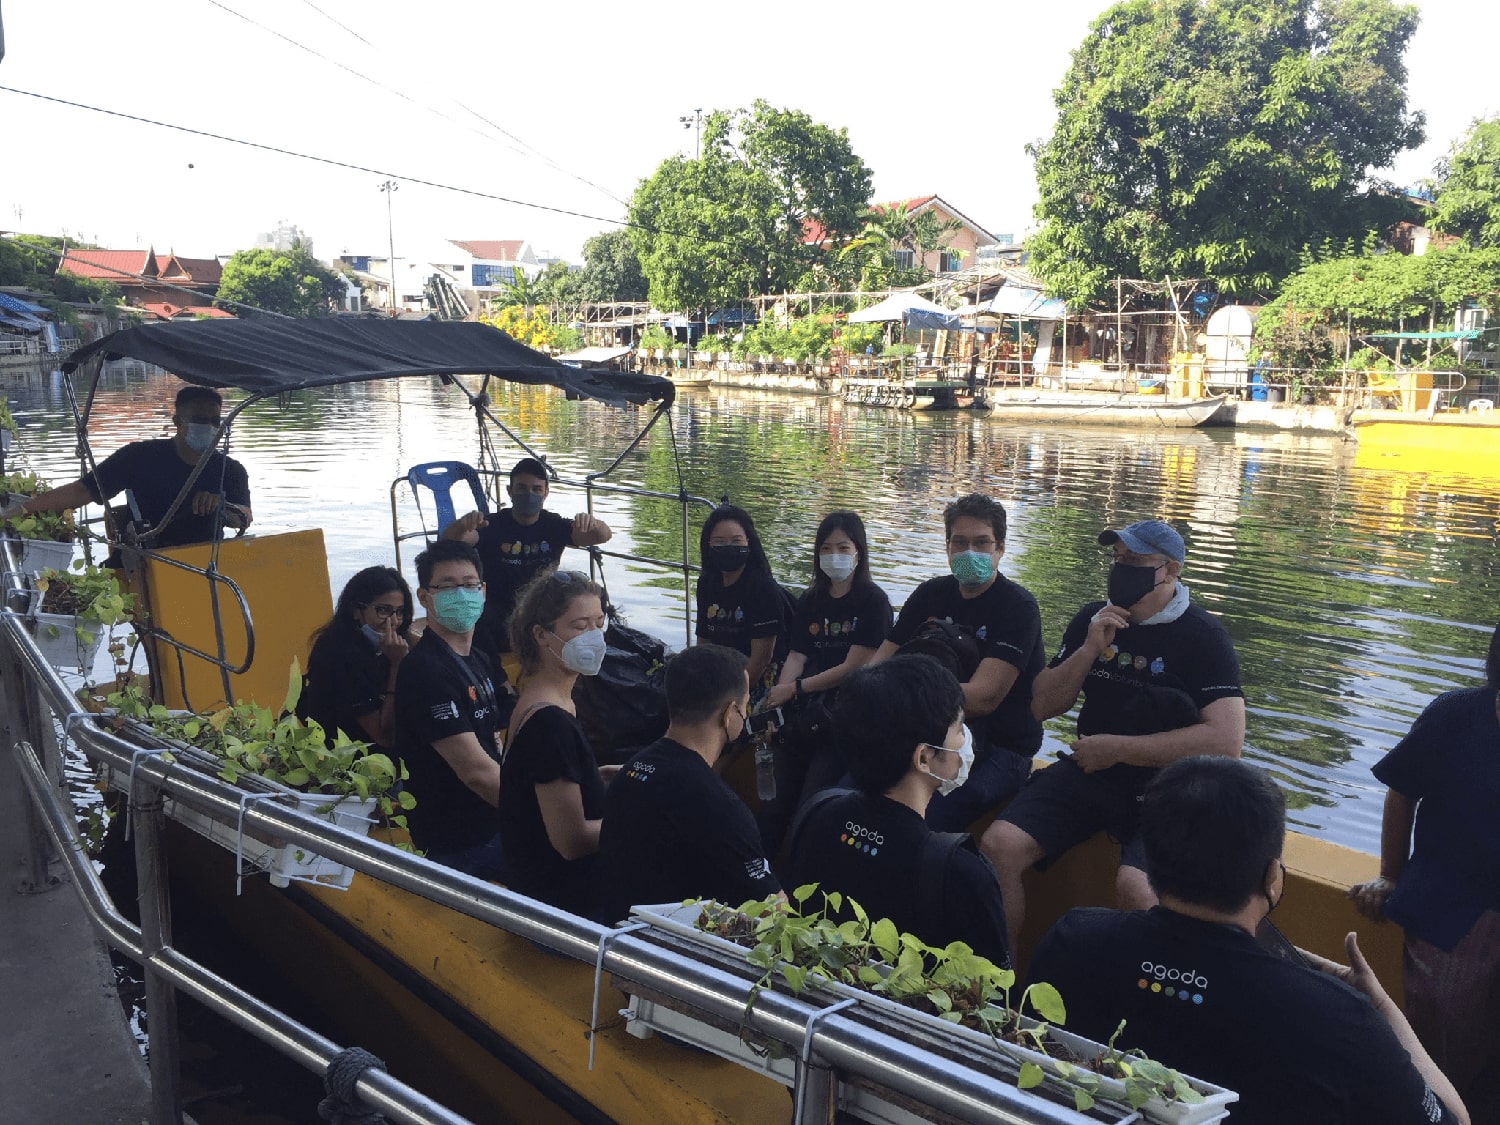 Helping a Bangkok neighborhood boost their community-based tourism program